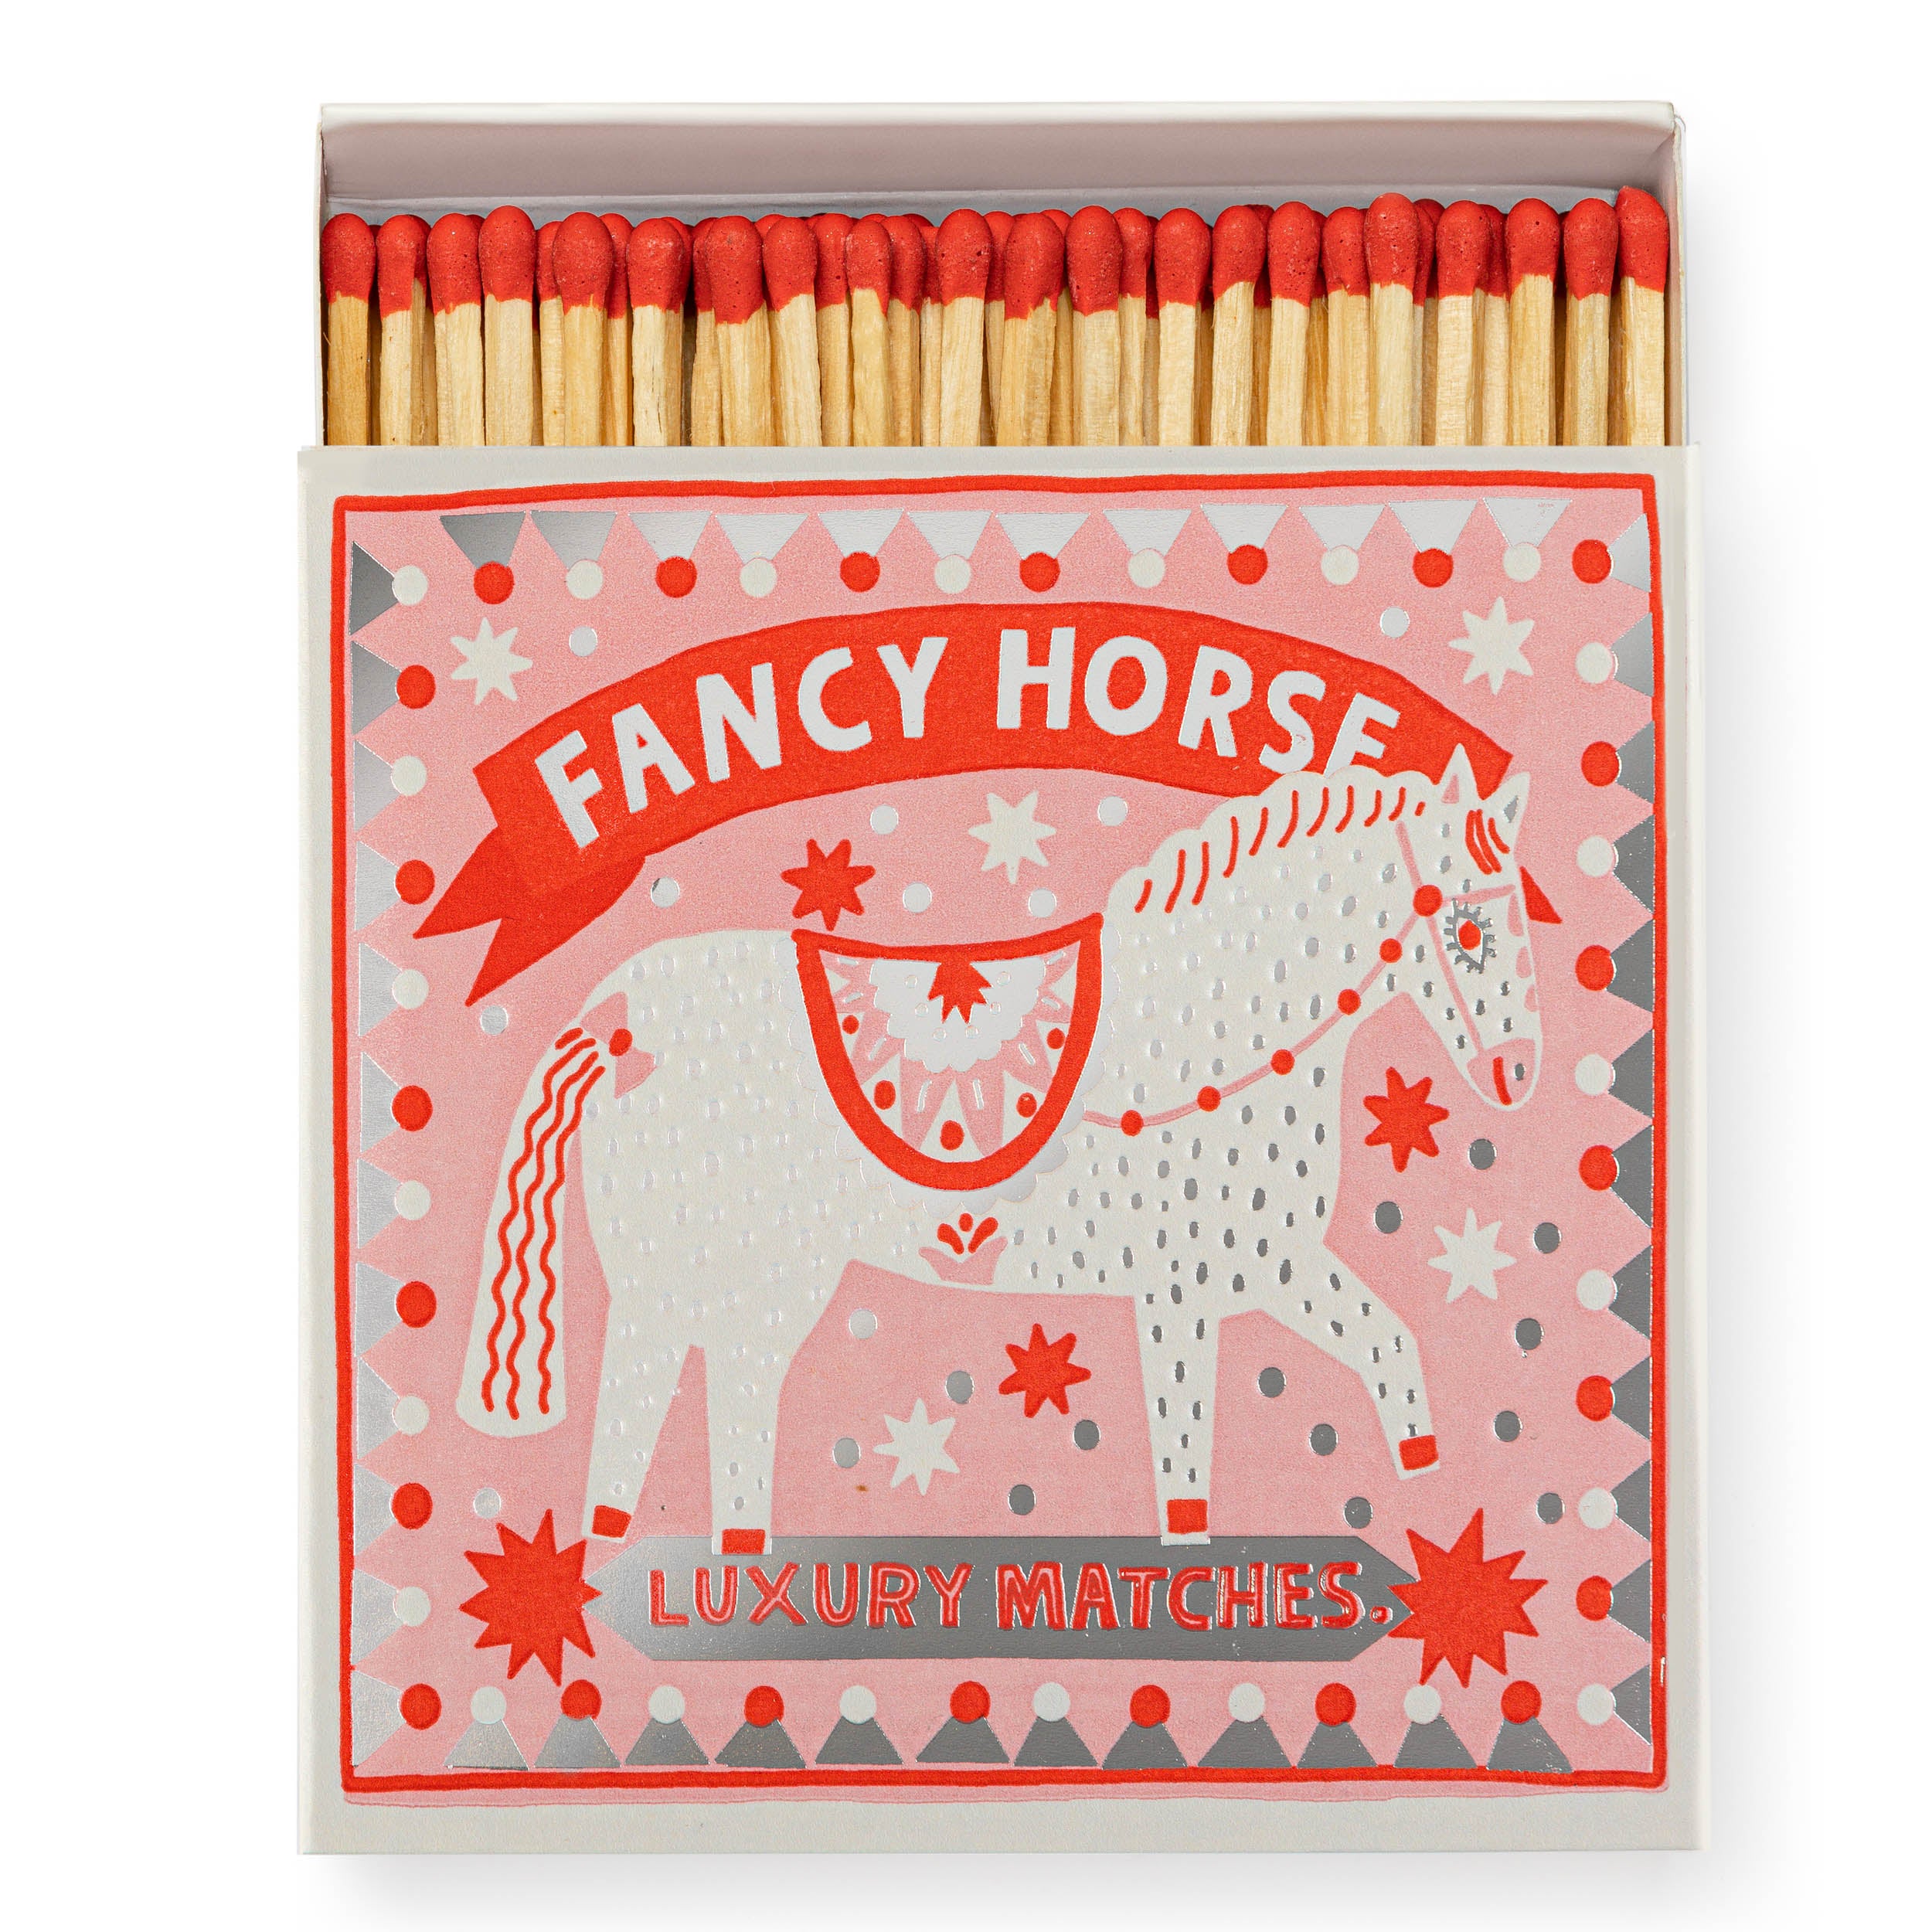 Archivist Square Matchbox - Fancy Horse Luxury Matches